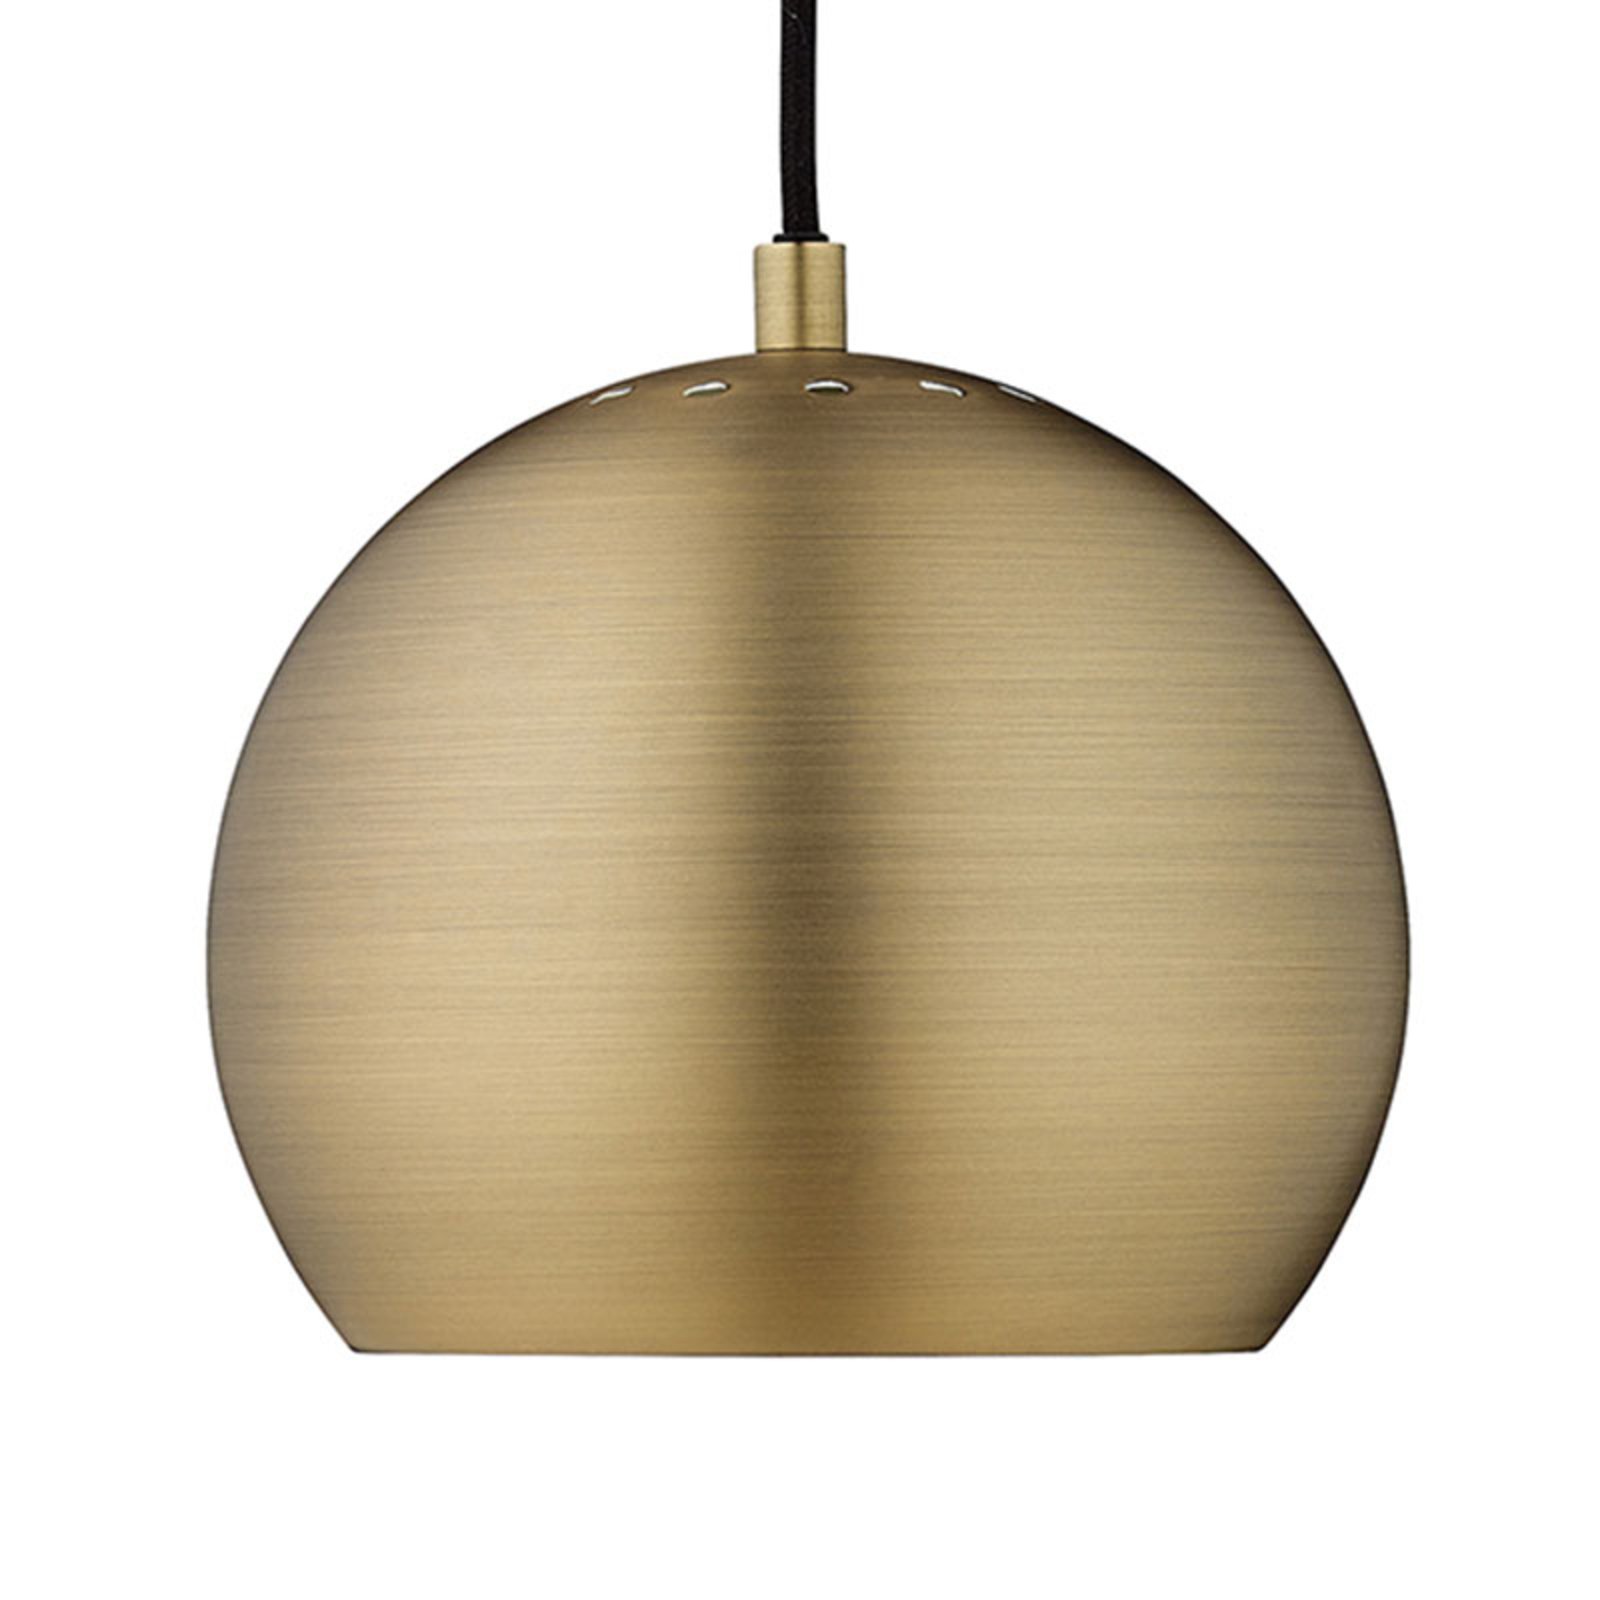 FRANDSEN hanglamp Bal, messingkleurig antiek, Ø 18 cm